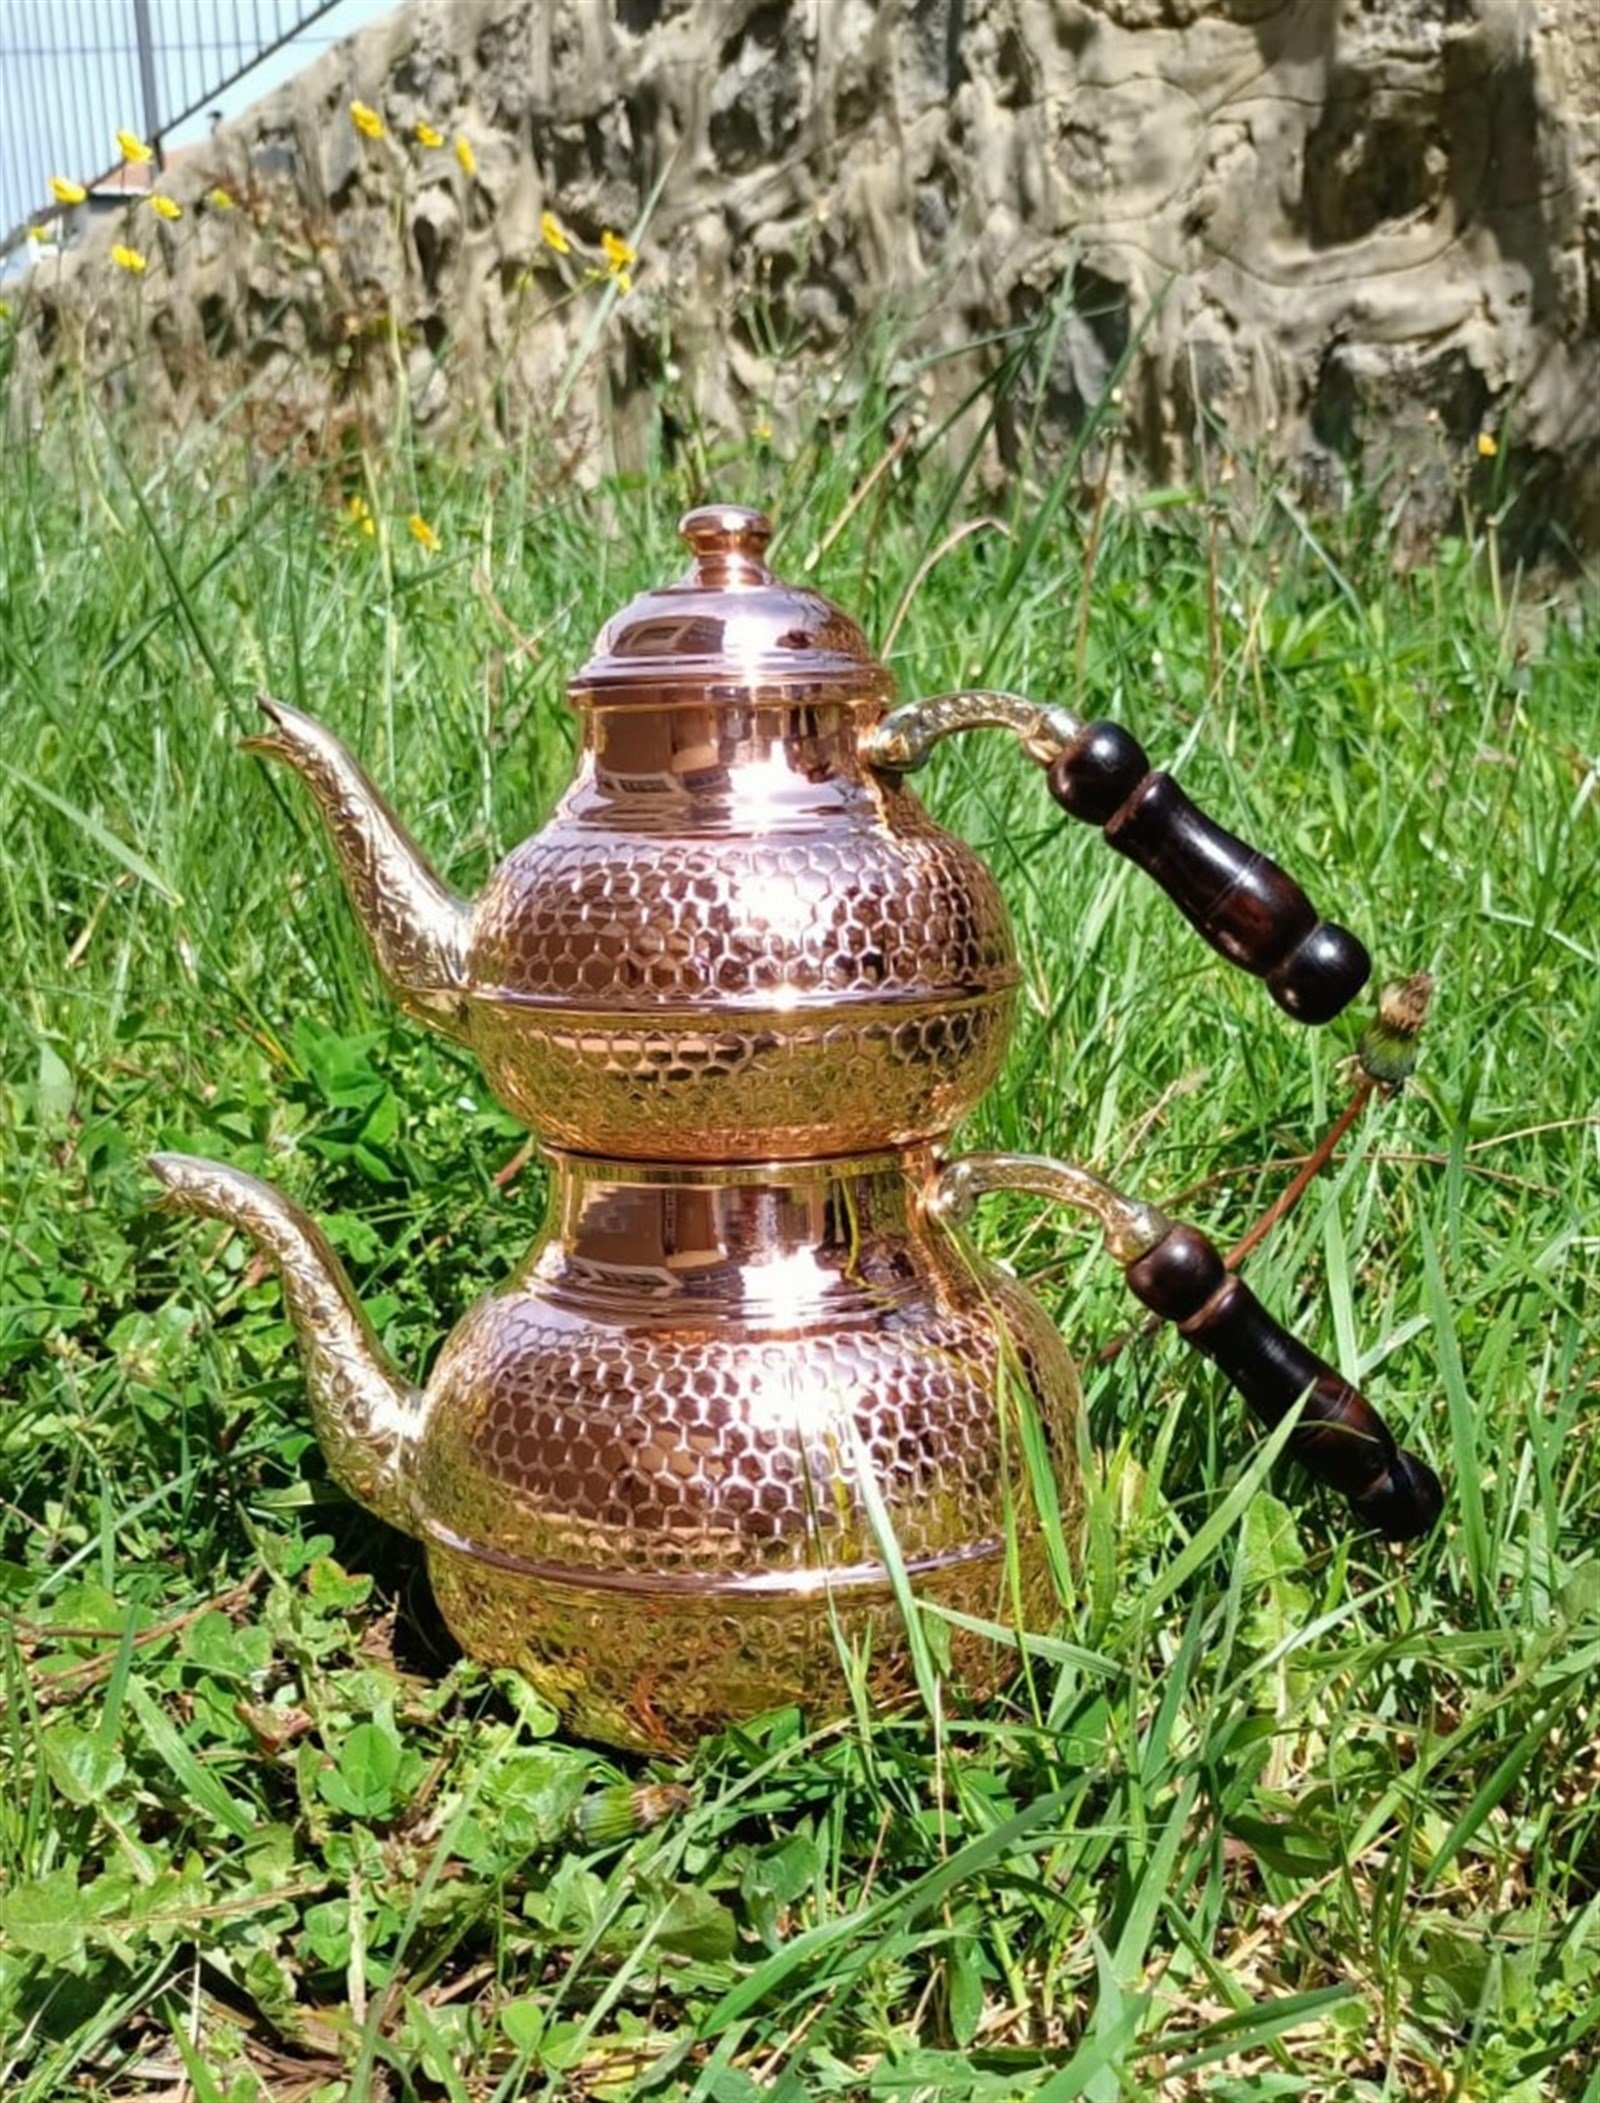 Handmade Copper Teapot (Caydanlik)